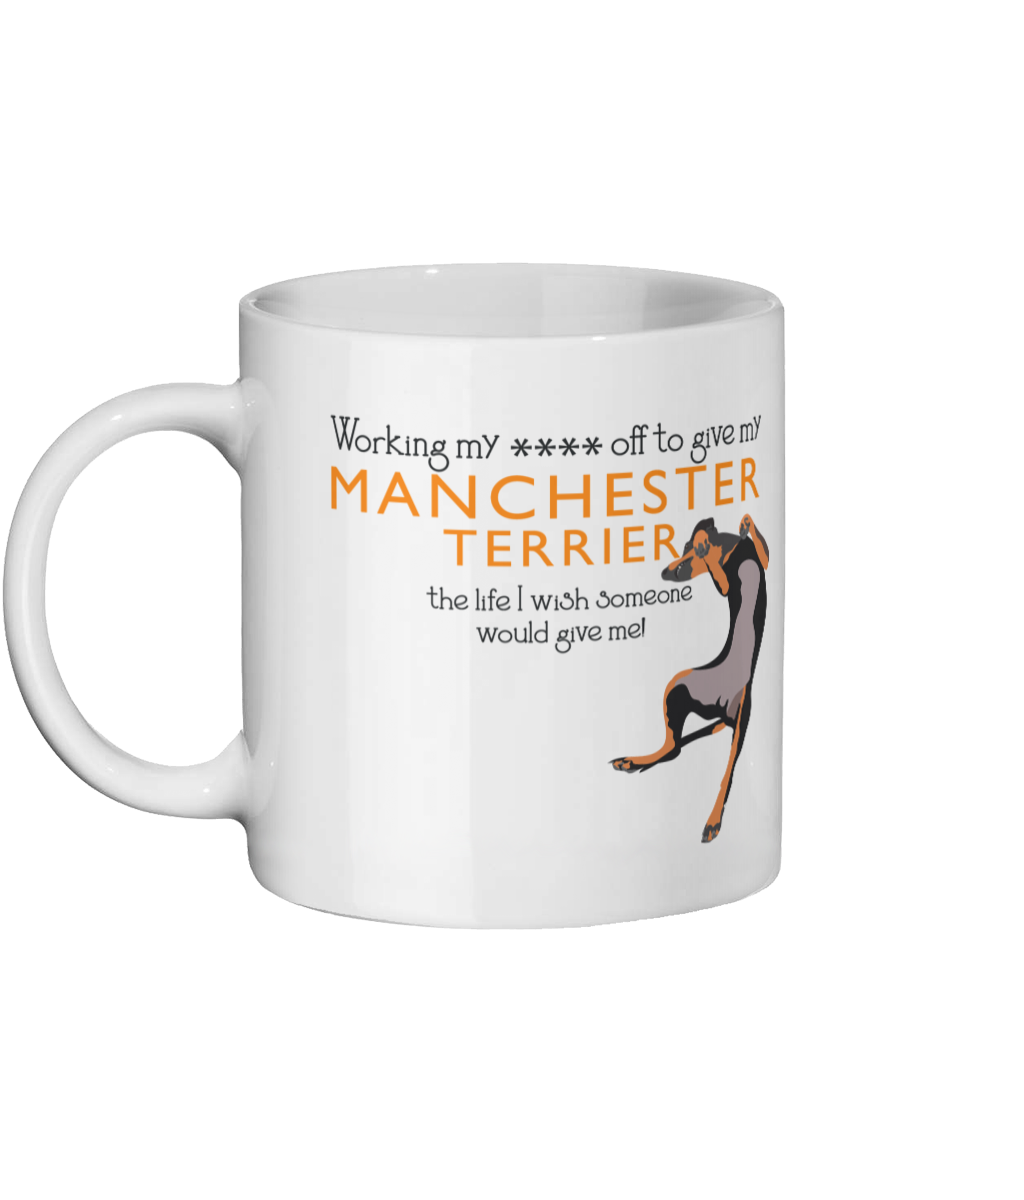 Manchester Terrier Mug - Working my **** off